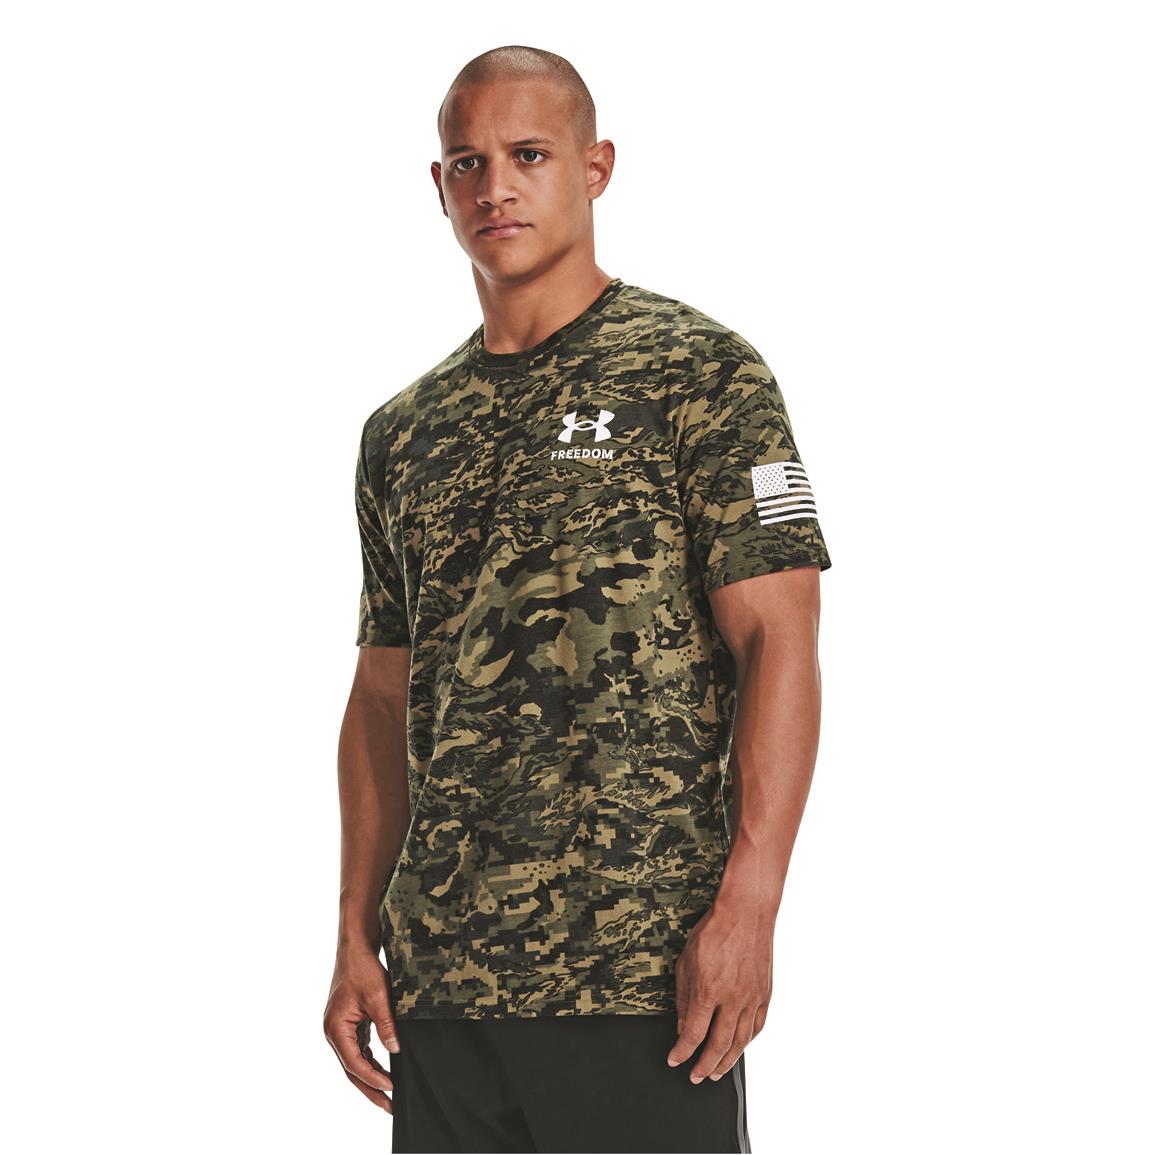 Under Armour Men's Freedom Short Sleeve Camo Shirt, Marine OD Green/White